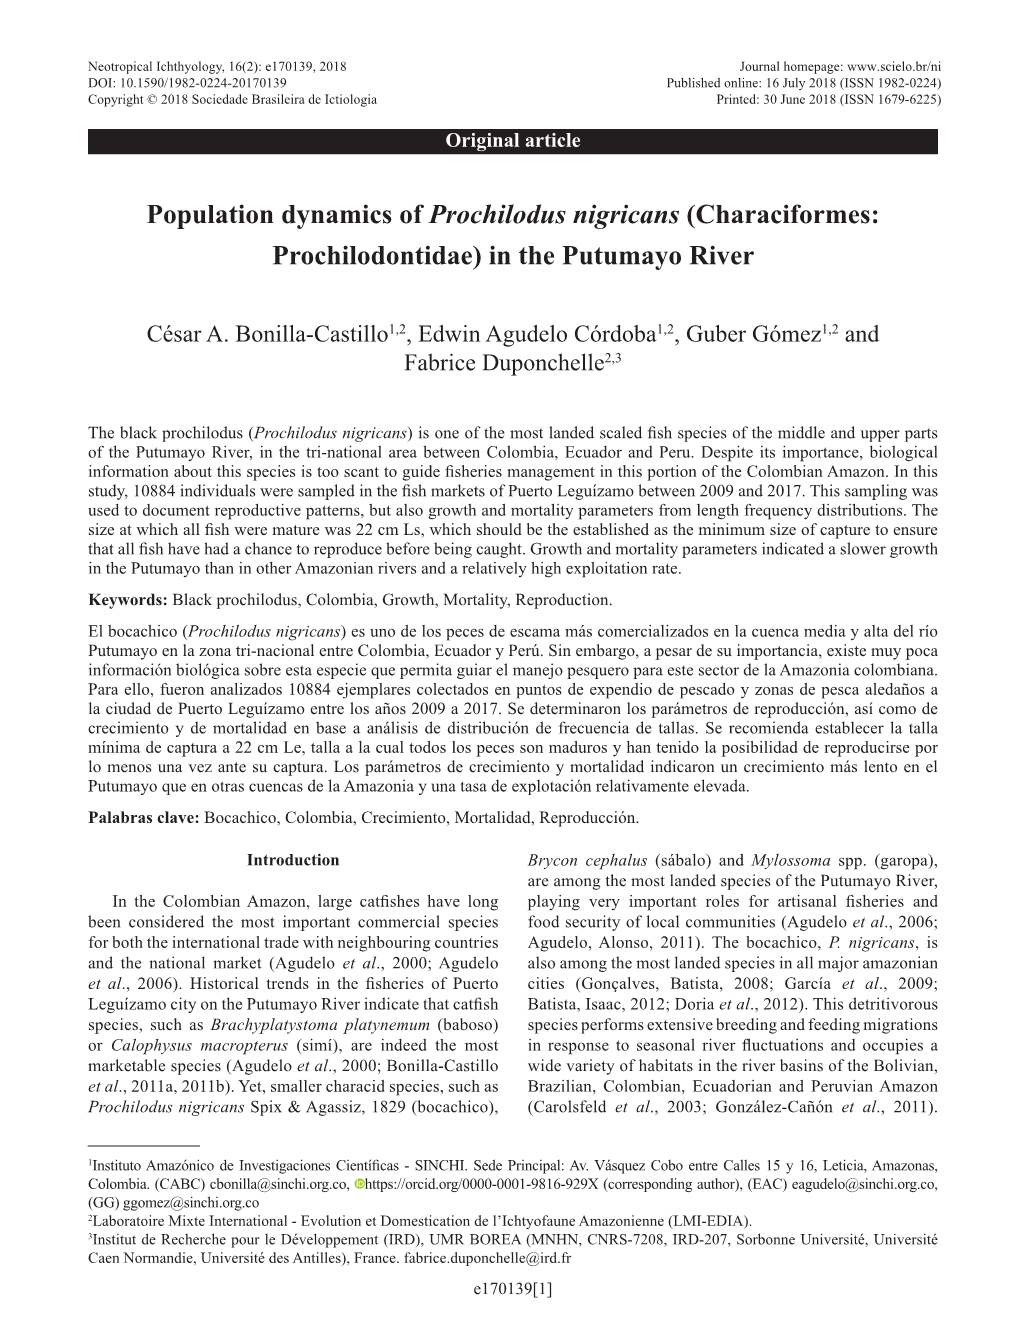 Population Dynamics of Prochilodus Nigricans.Pdf